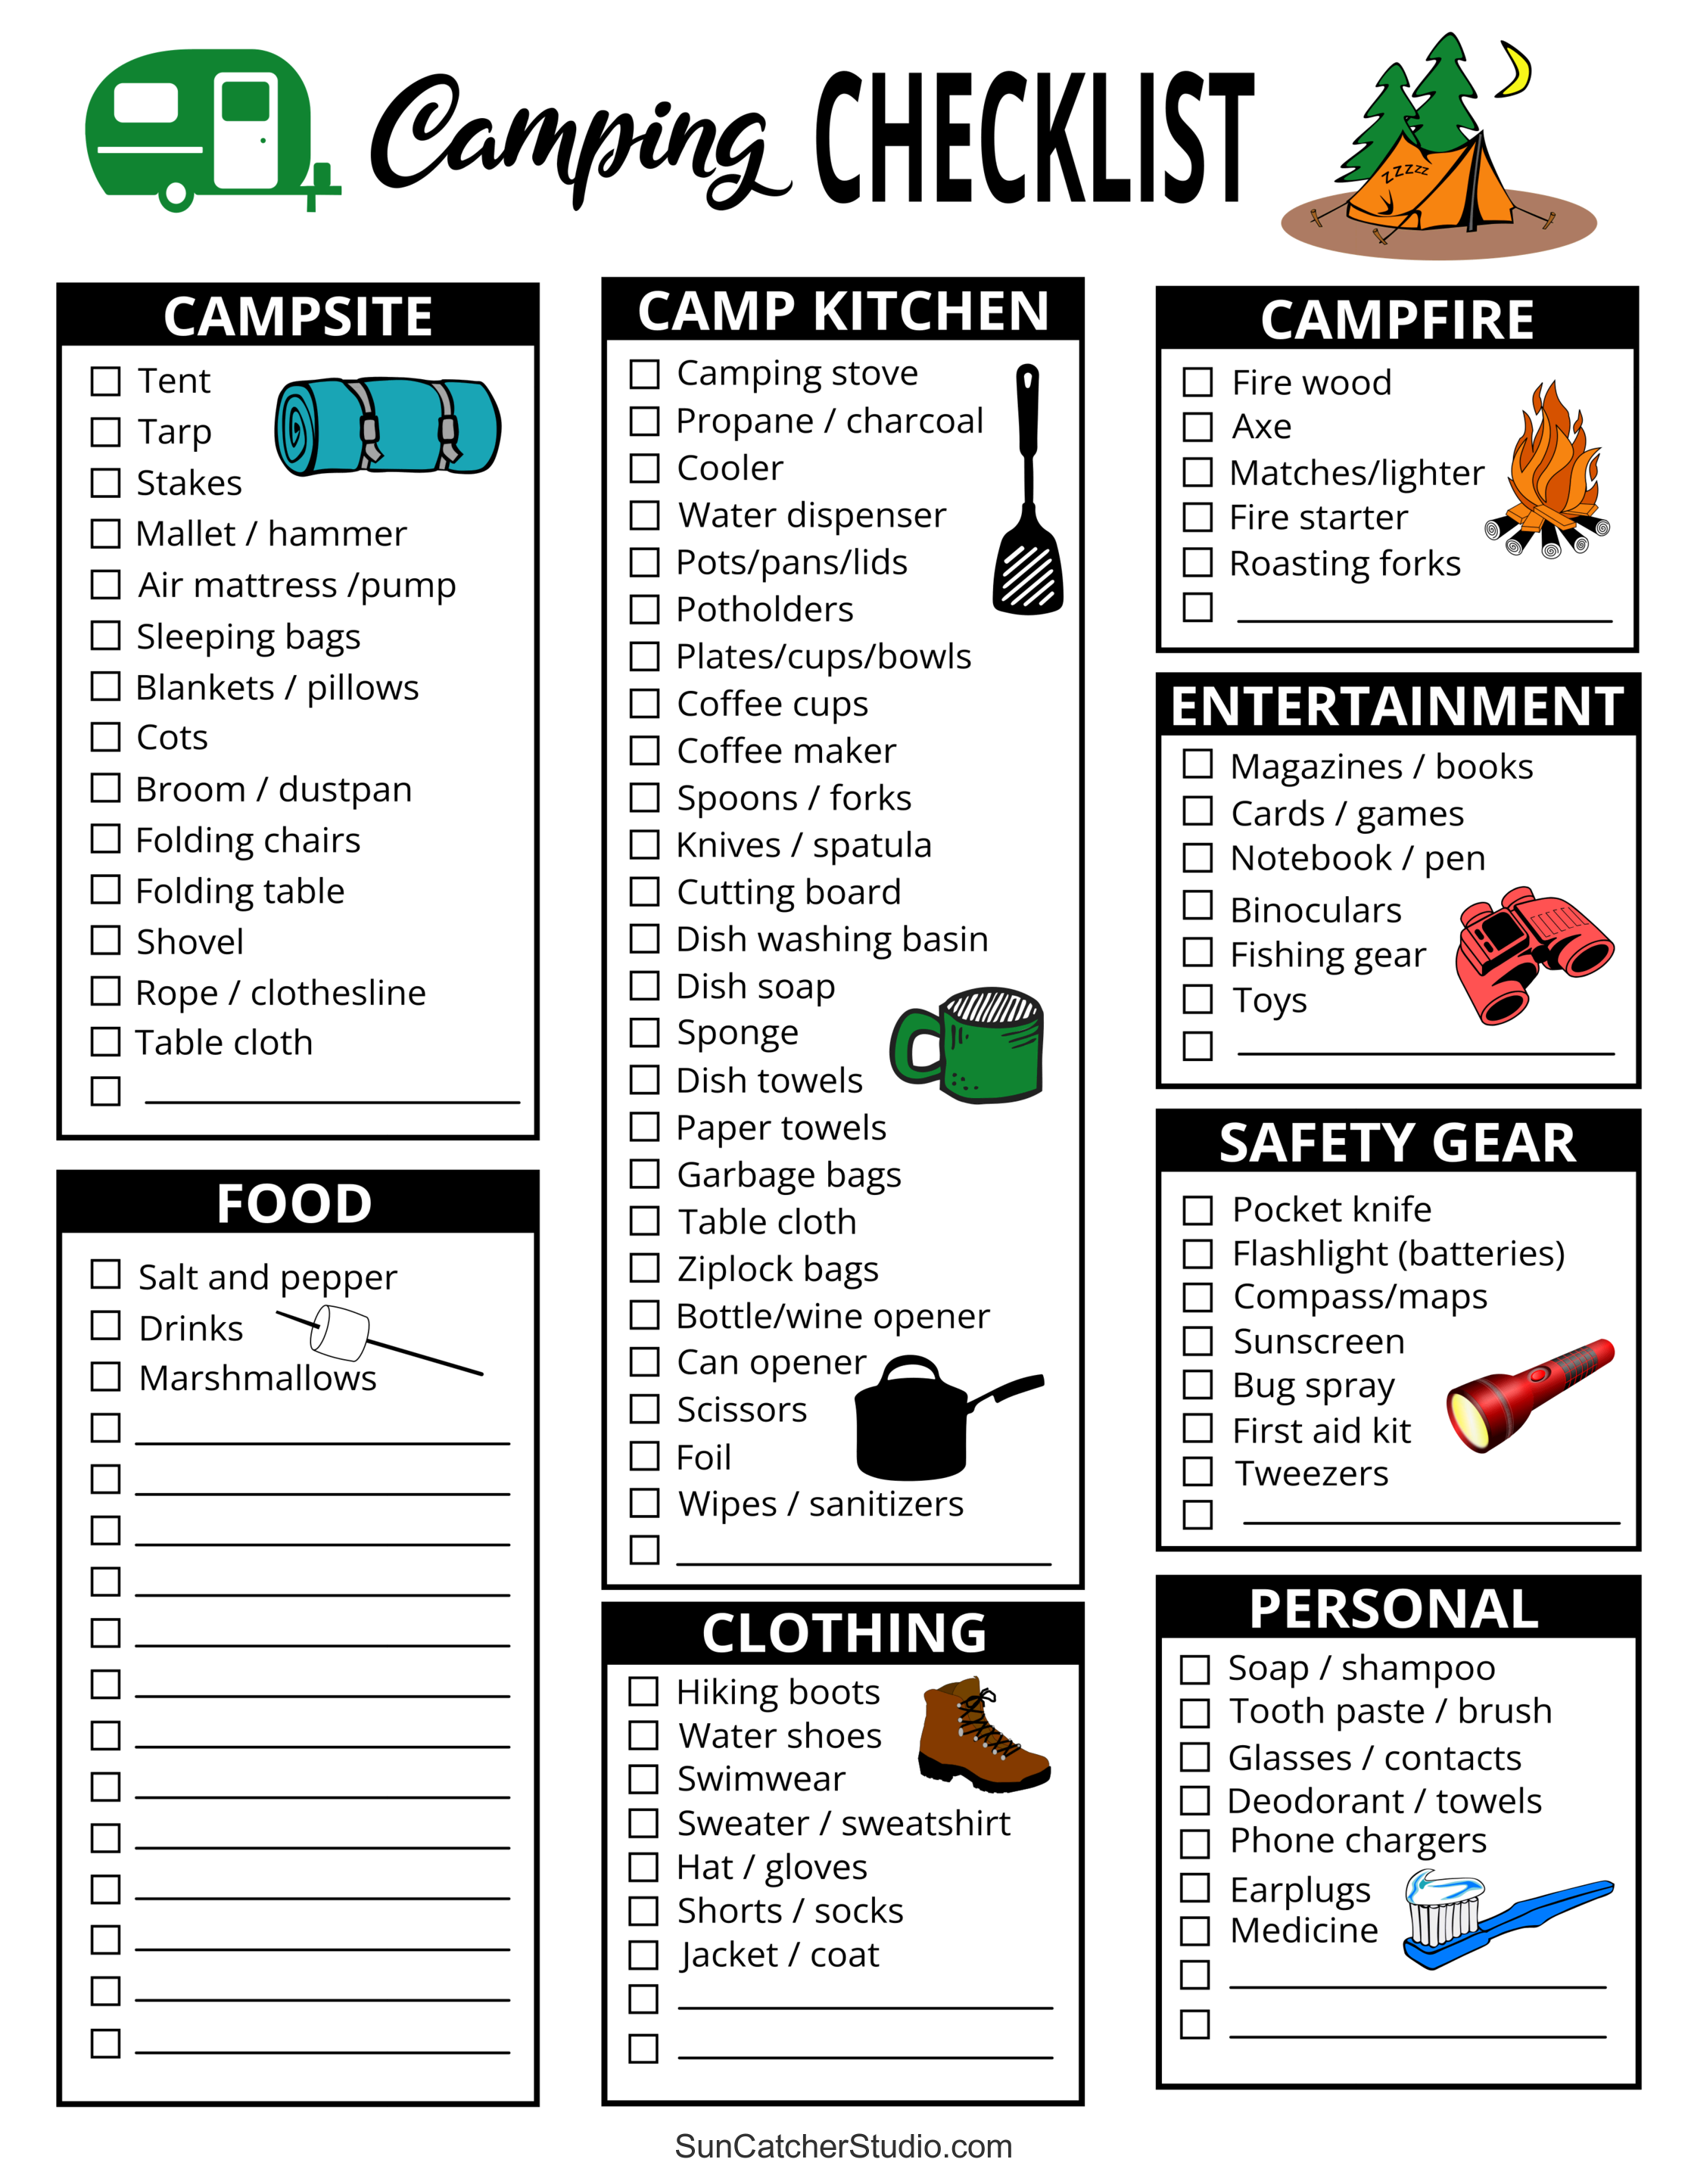 https://suncatcherstudio.com/uploads/printables/camping-checklist/pdf-png/printable-camping-checklist-010101-fefefe.png